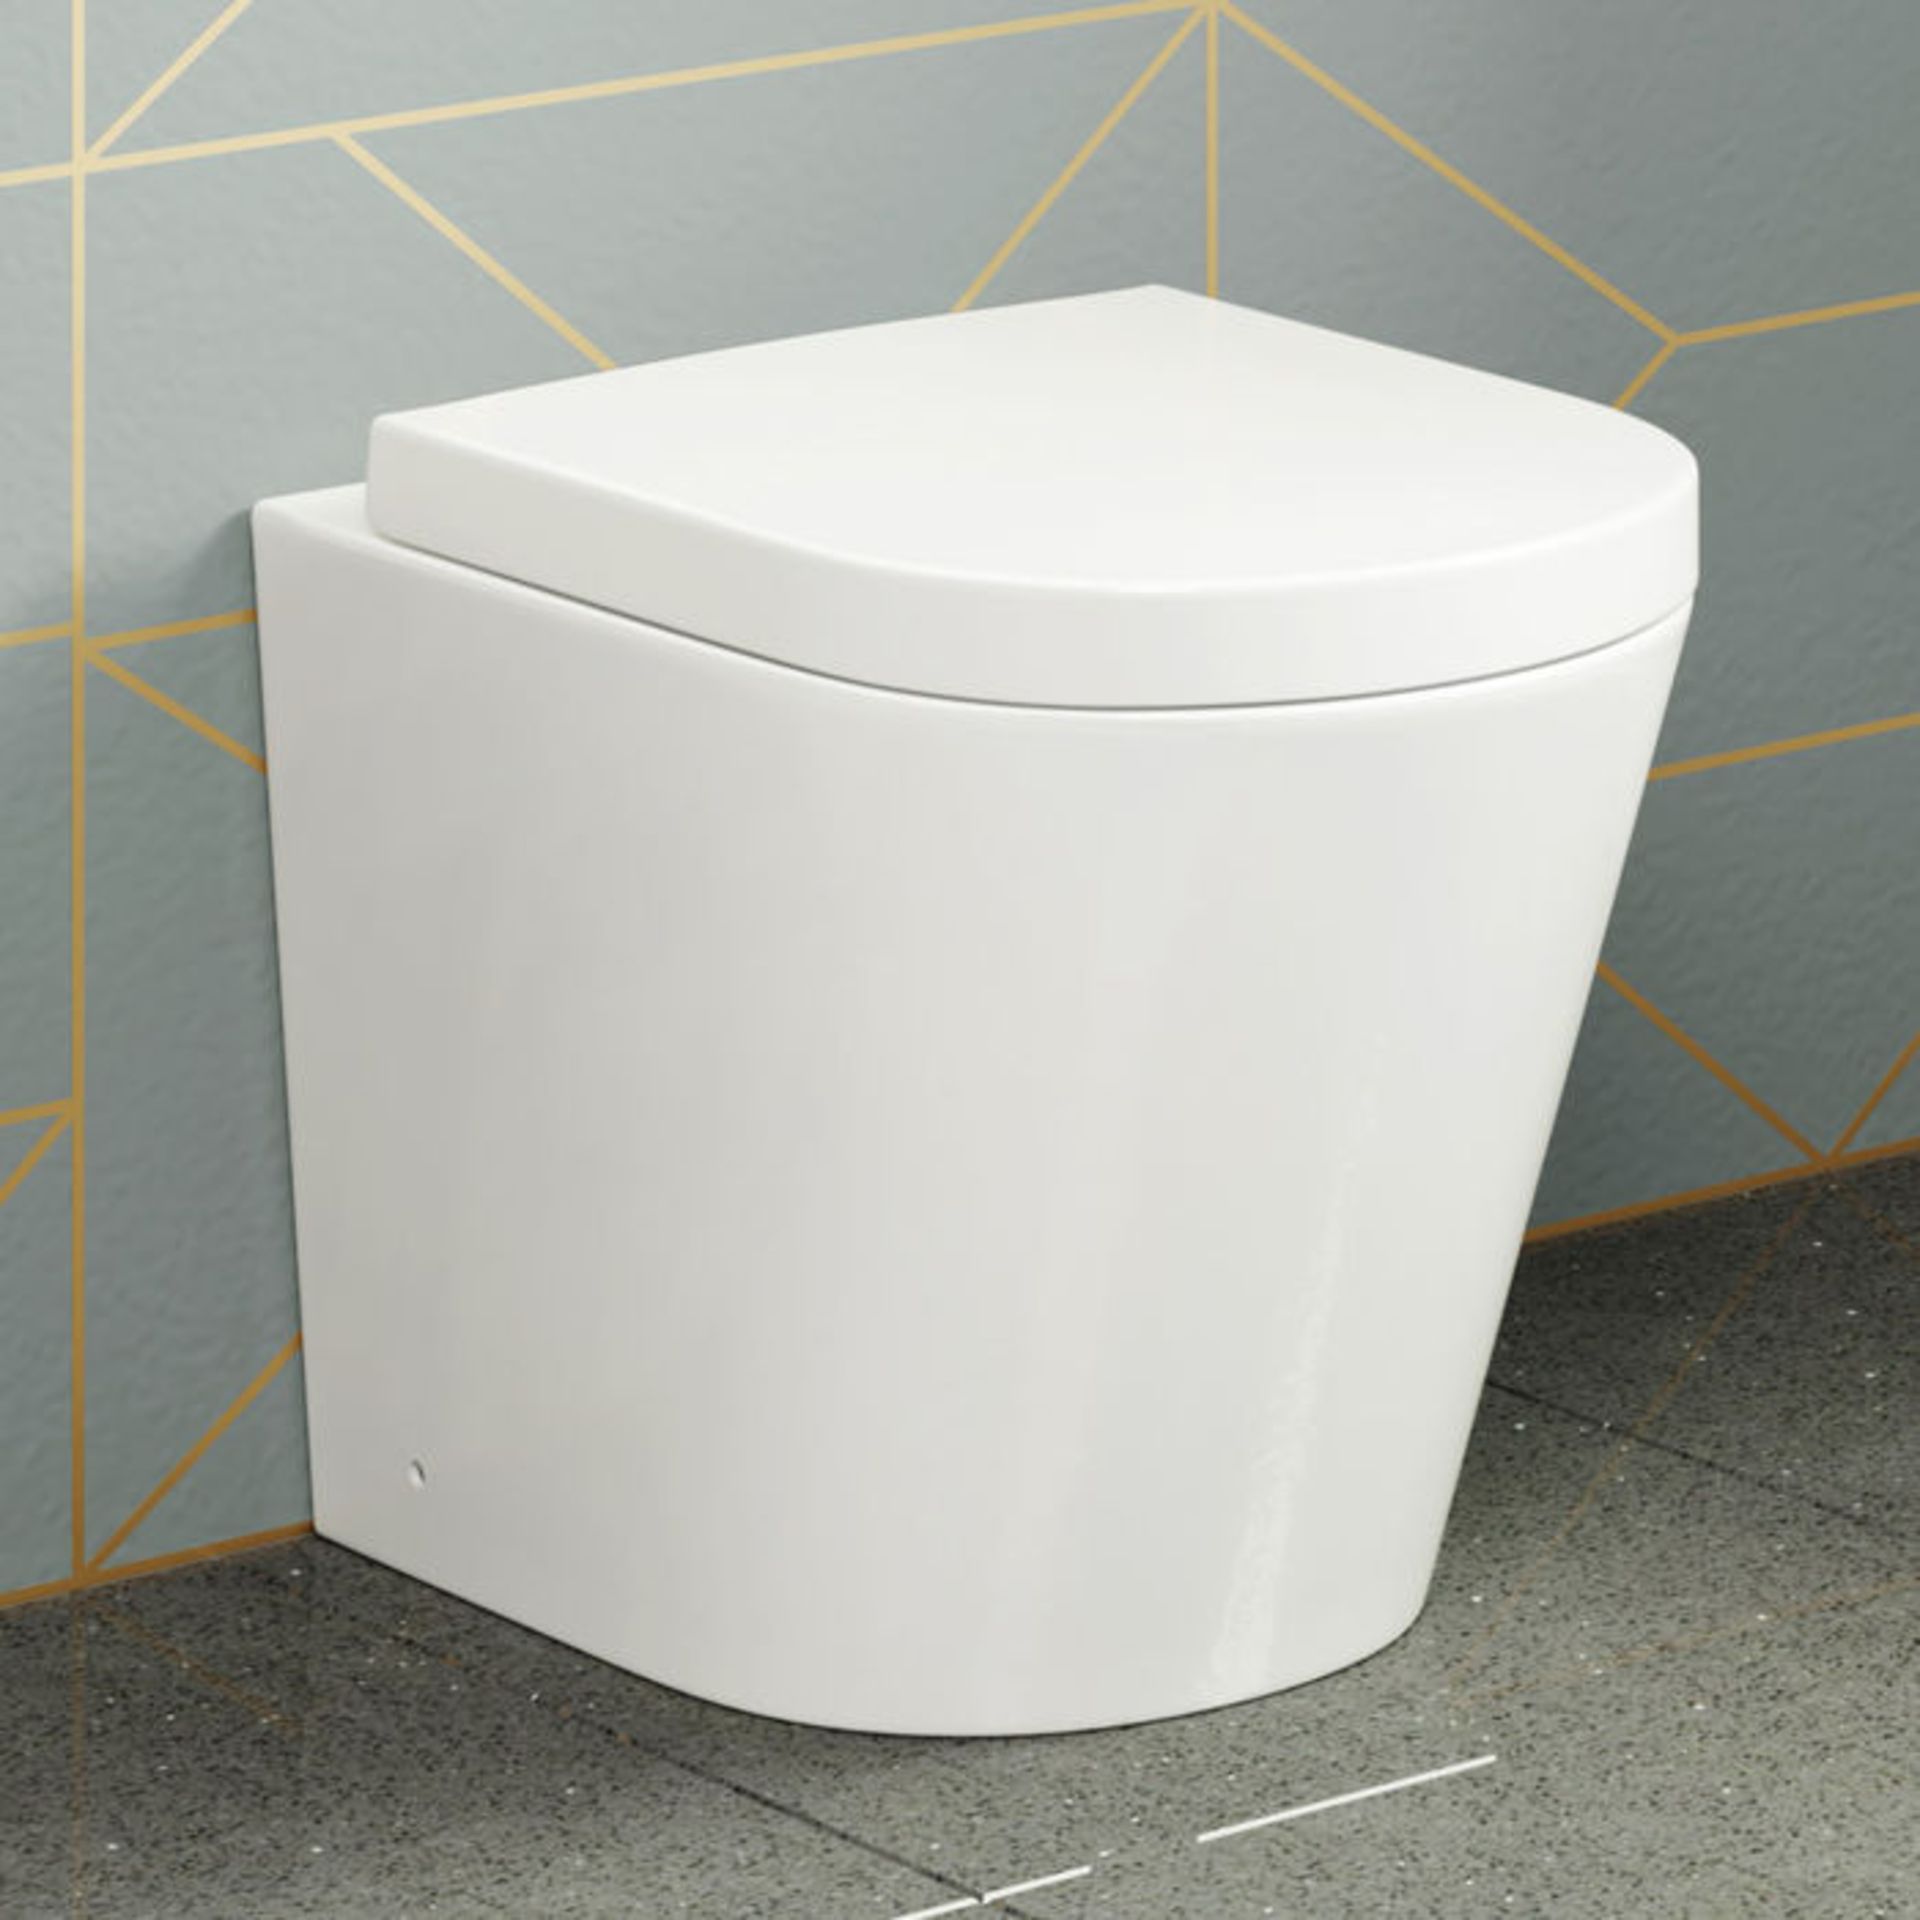 (TA258) Lyon Back to Wall Toilet inc Luxury Soft Close Seat. Our Lyon back to wall toilet is made